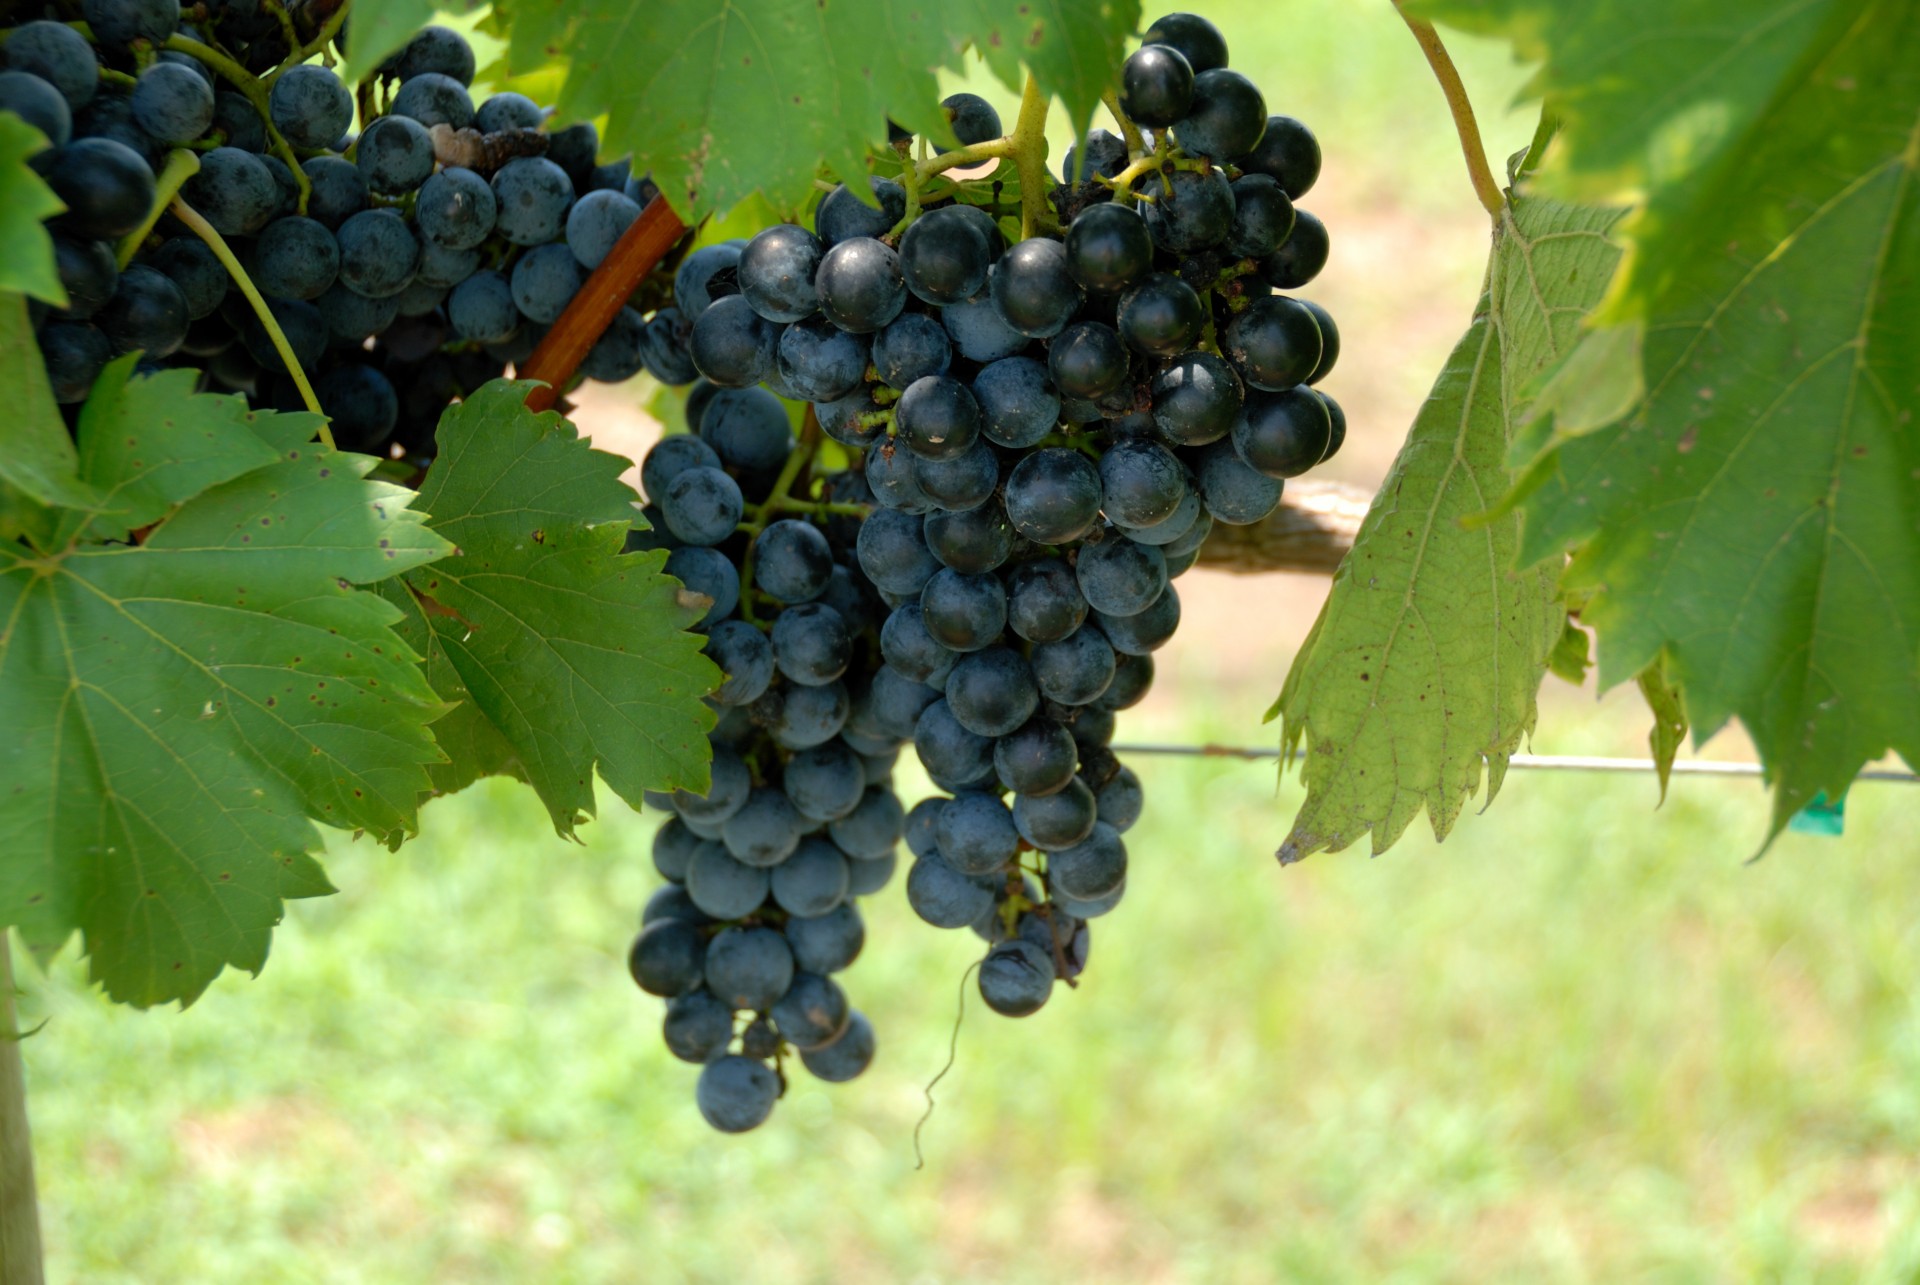 Grapes hanging on vine